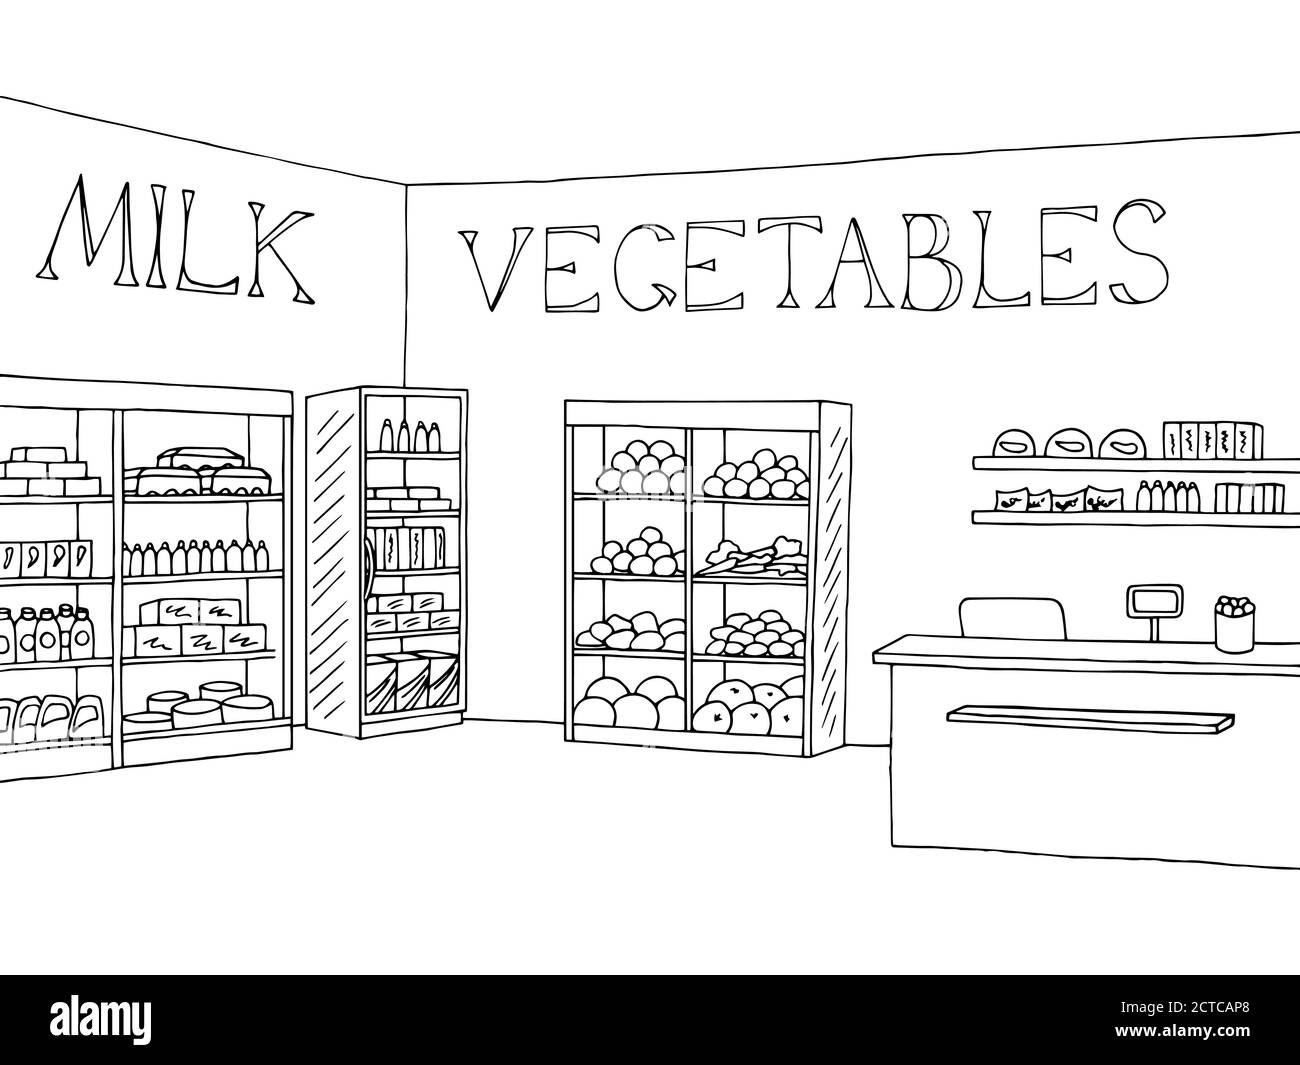 Lebensmittelgeschäft Shop Interieur schwarz weiß Grafik Skizze Illustration Vektor Stock Vektor